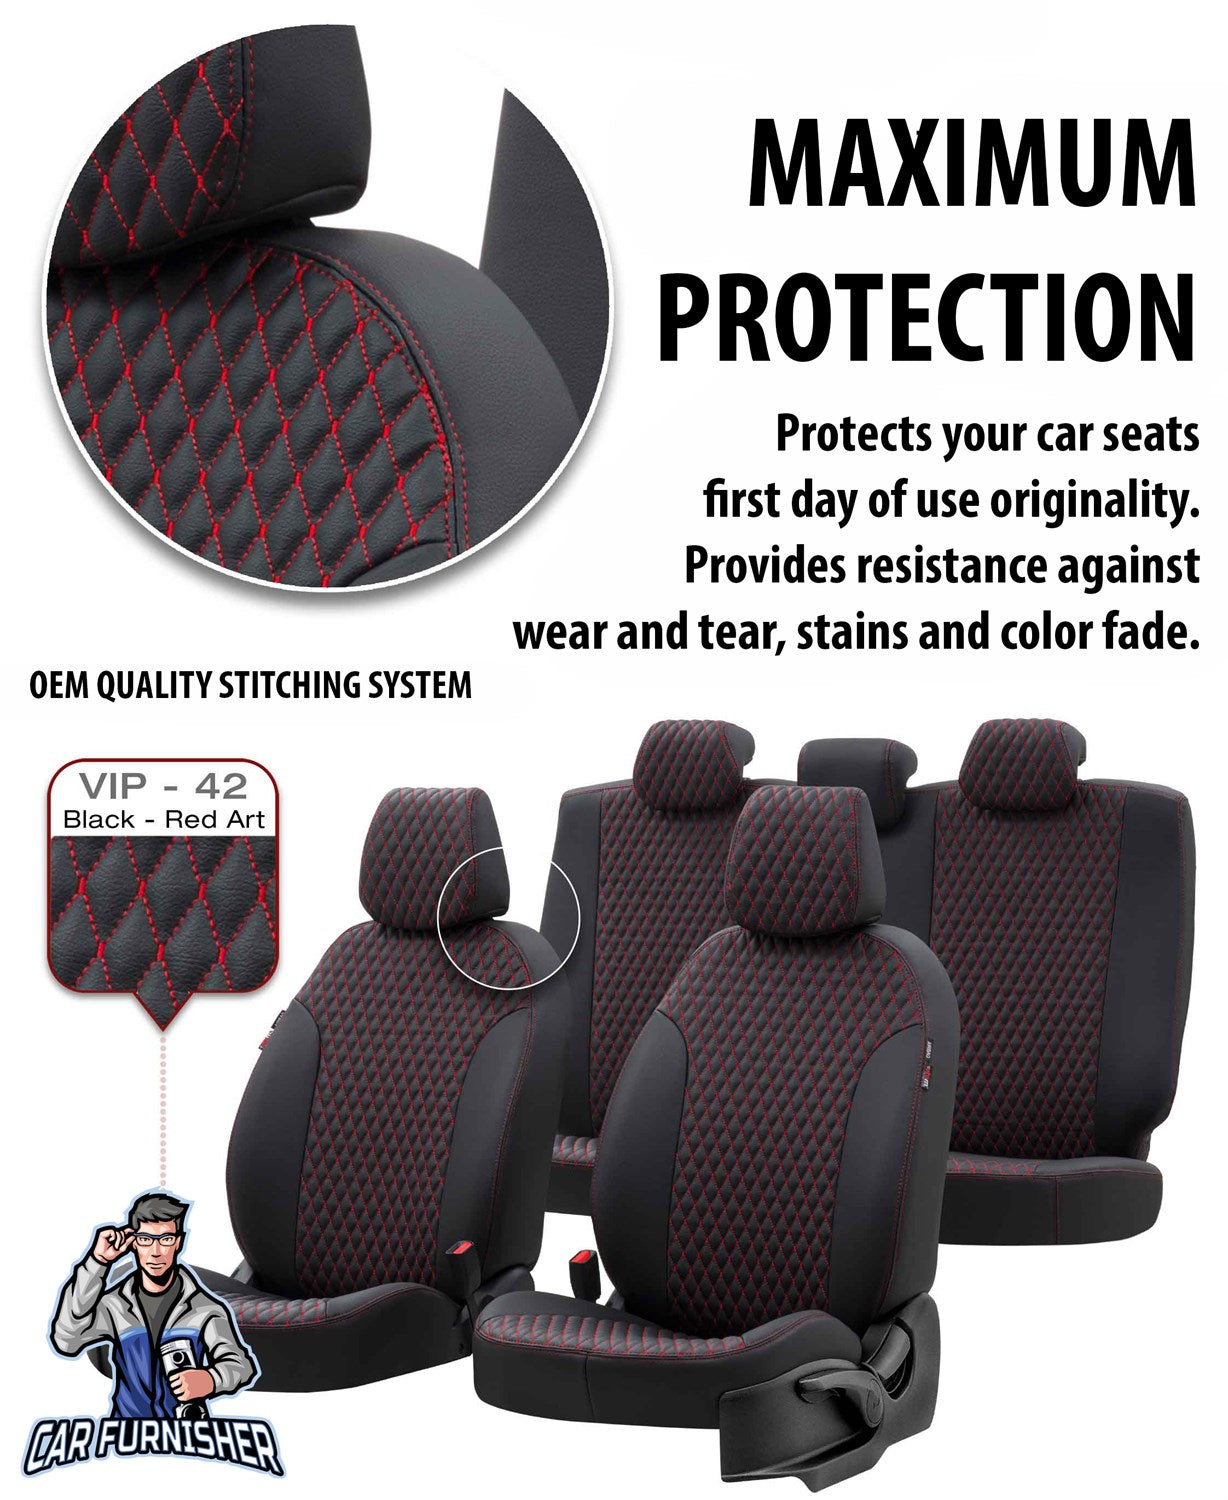 Nissan Primera Seat Covers Amsterdam Leather Design Black Leather